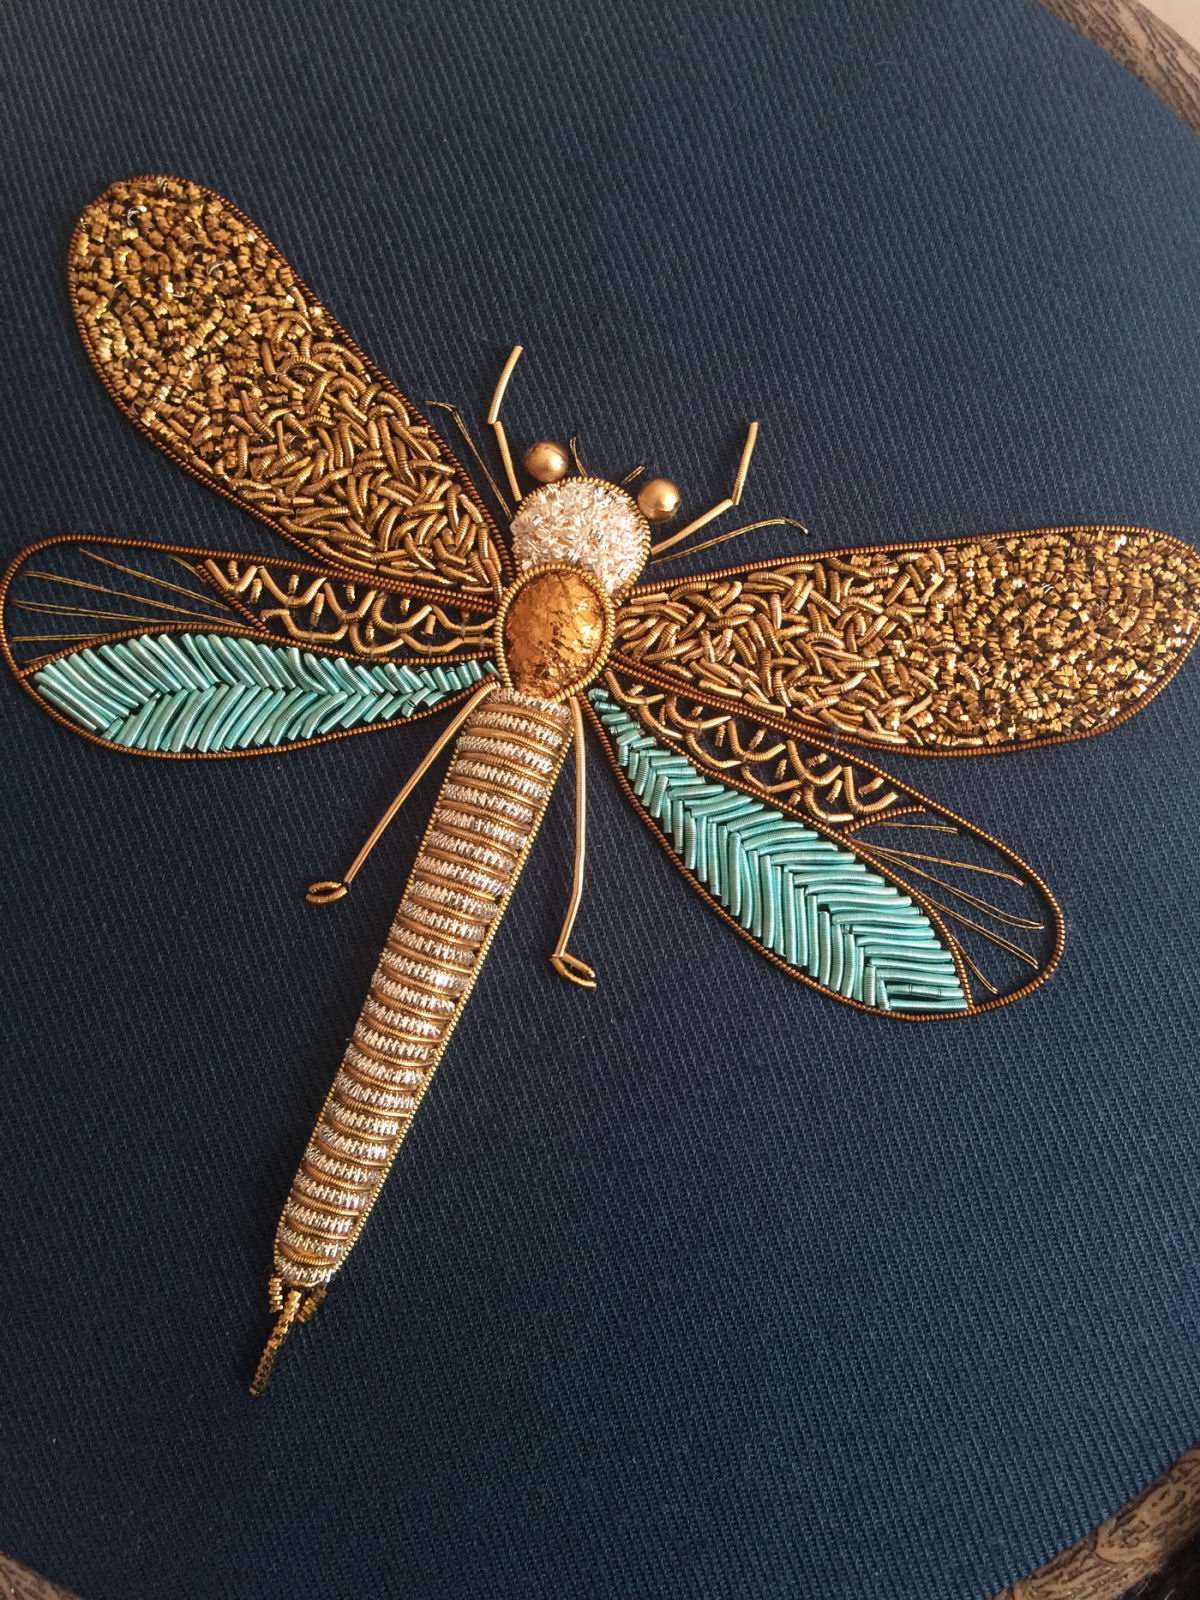 Fascinantes bordados de liblulas e outros insetos que incorpora grnulos metlicos 10